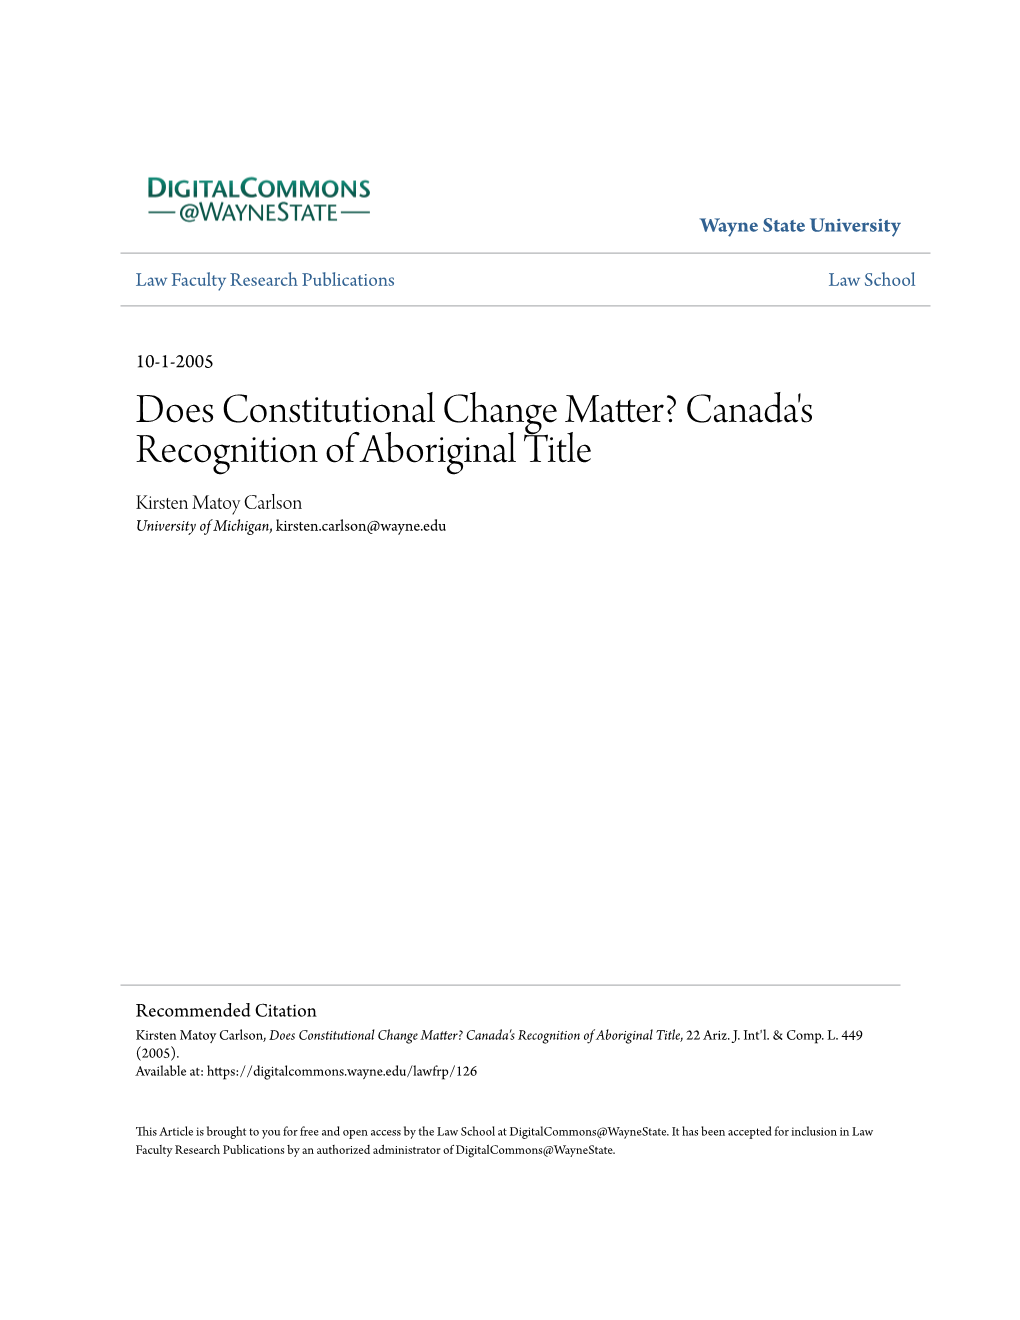 Does Constitutional Change Matter? Canada's Recognition of Aboriginal Title Kirsten Matoy Carlson University of Michigan, Kirsten.Carlson@Wayne.Edu